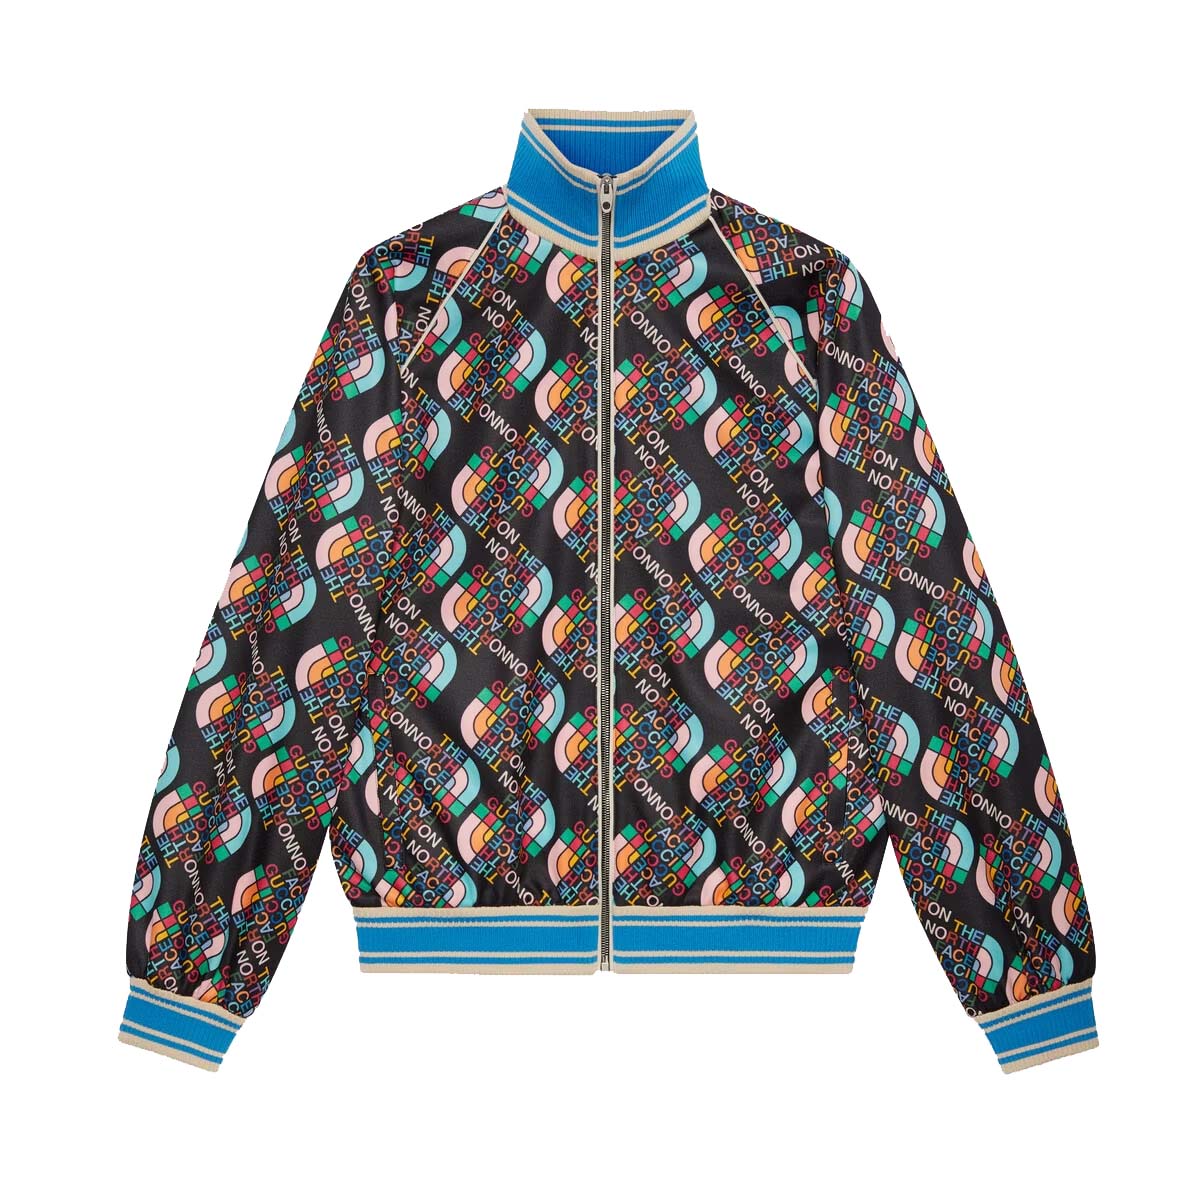 Gucci x The North Face Zip Jacket Multicolor